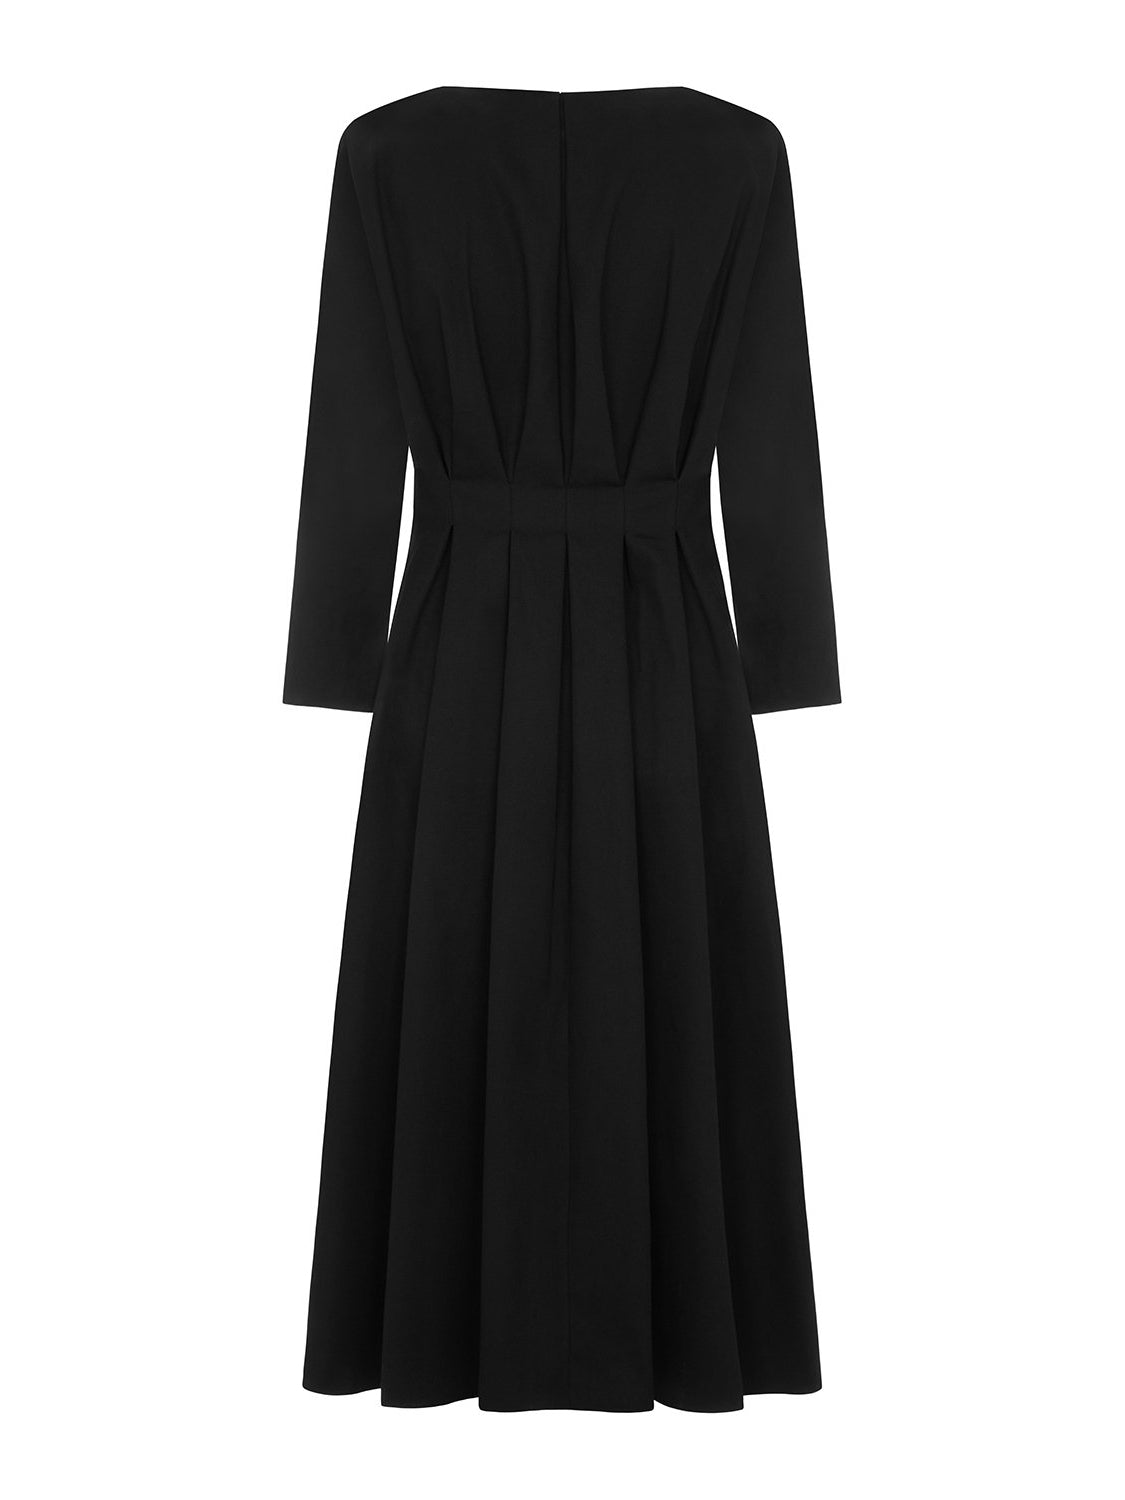 Sophie Dress in Black